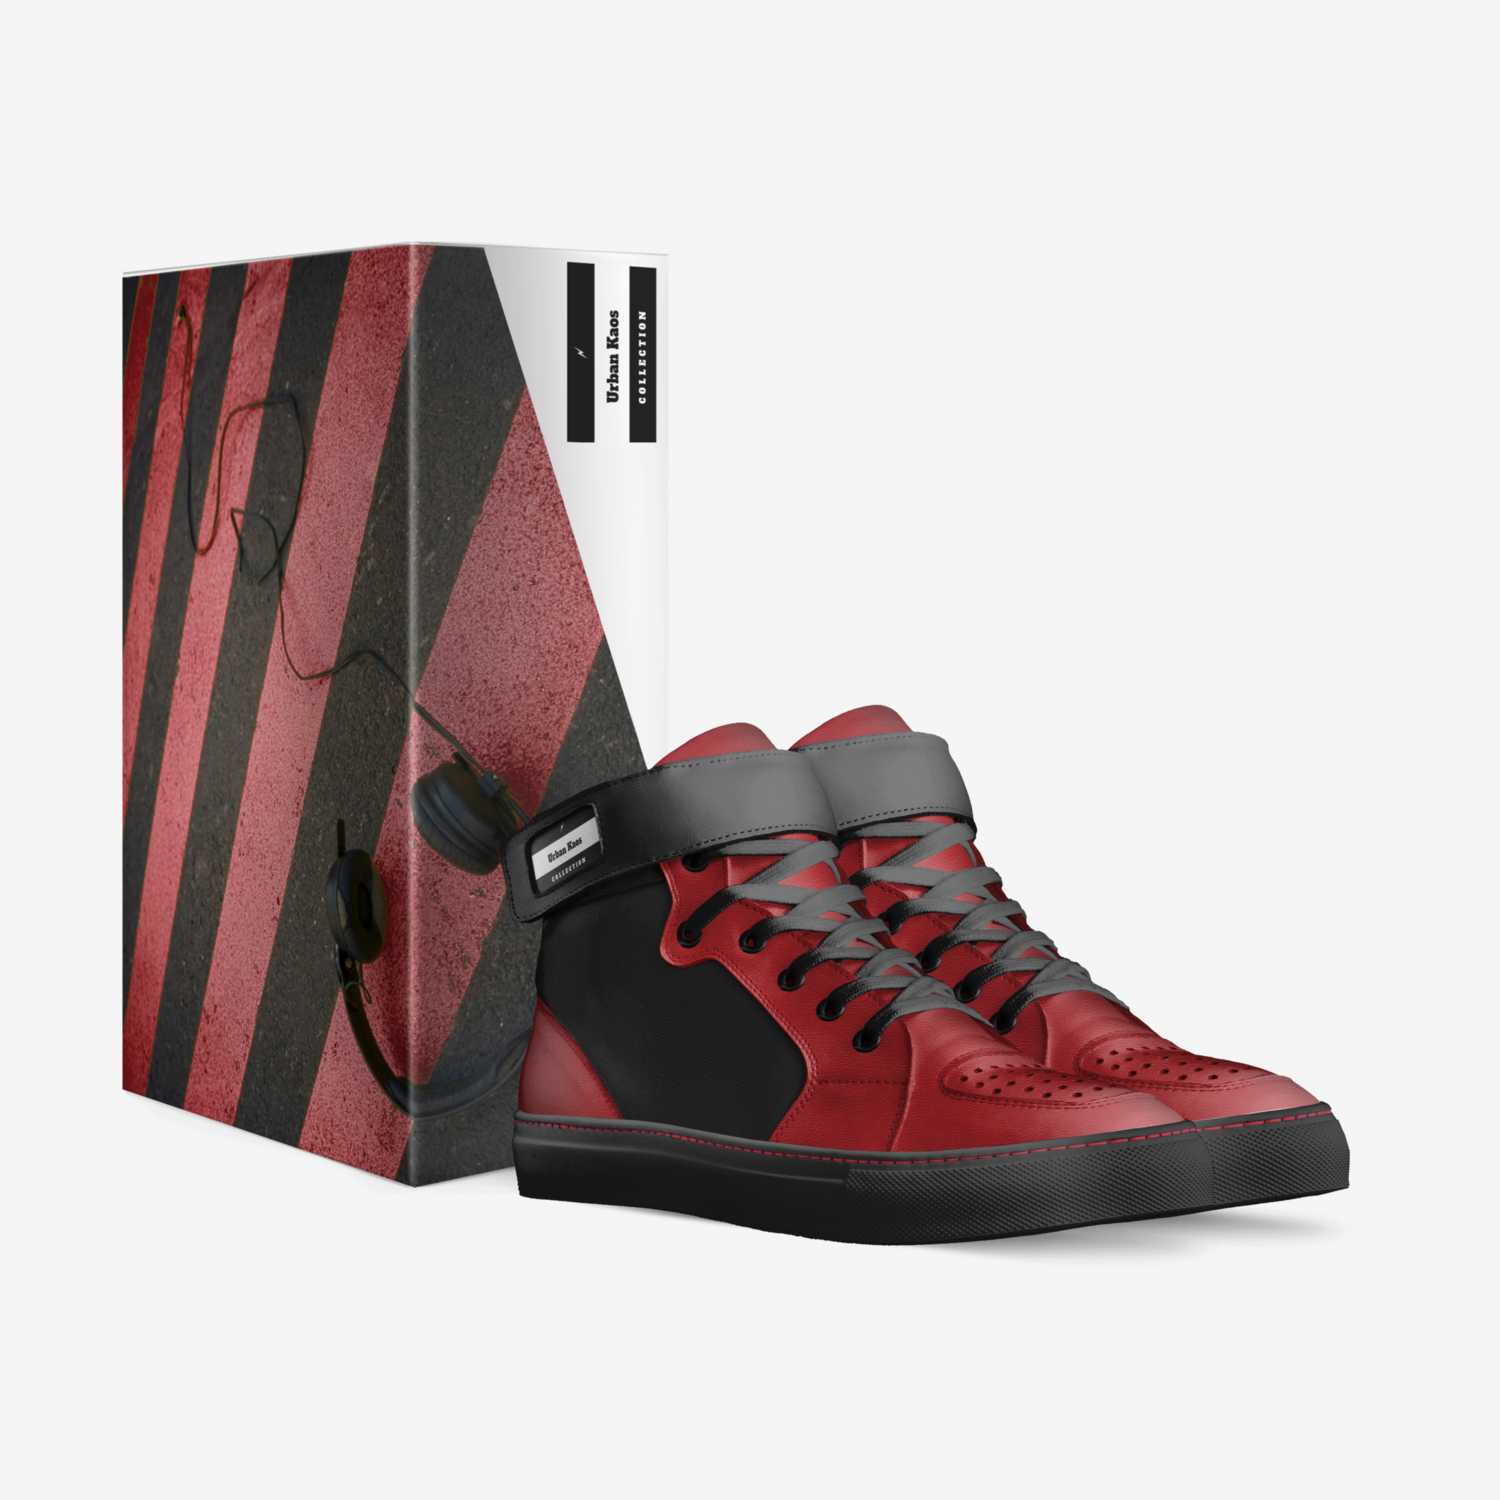 Urban Kaos  custom made in Italy shoes by R. E. Jade | Box view